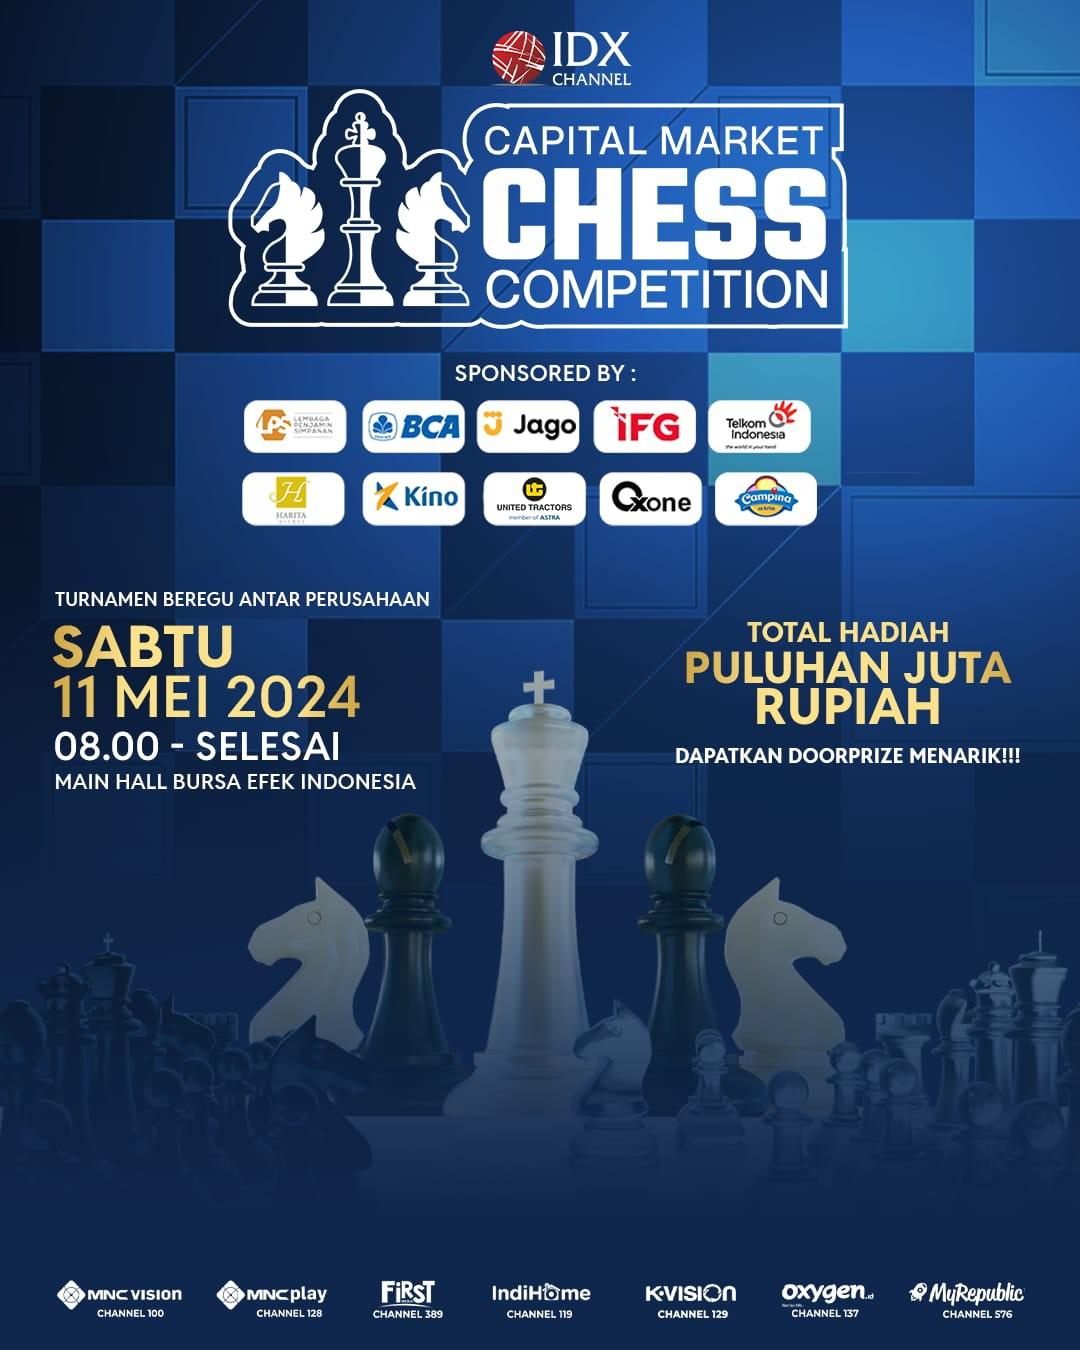 IDX Channel Gelar Capital Market Chess Competition 2024, Total Hadiah Puluhan Juta Rupiah